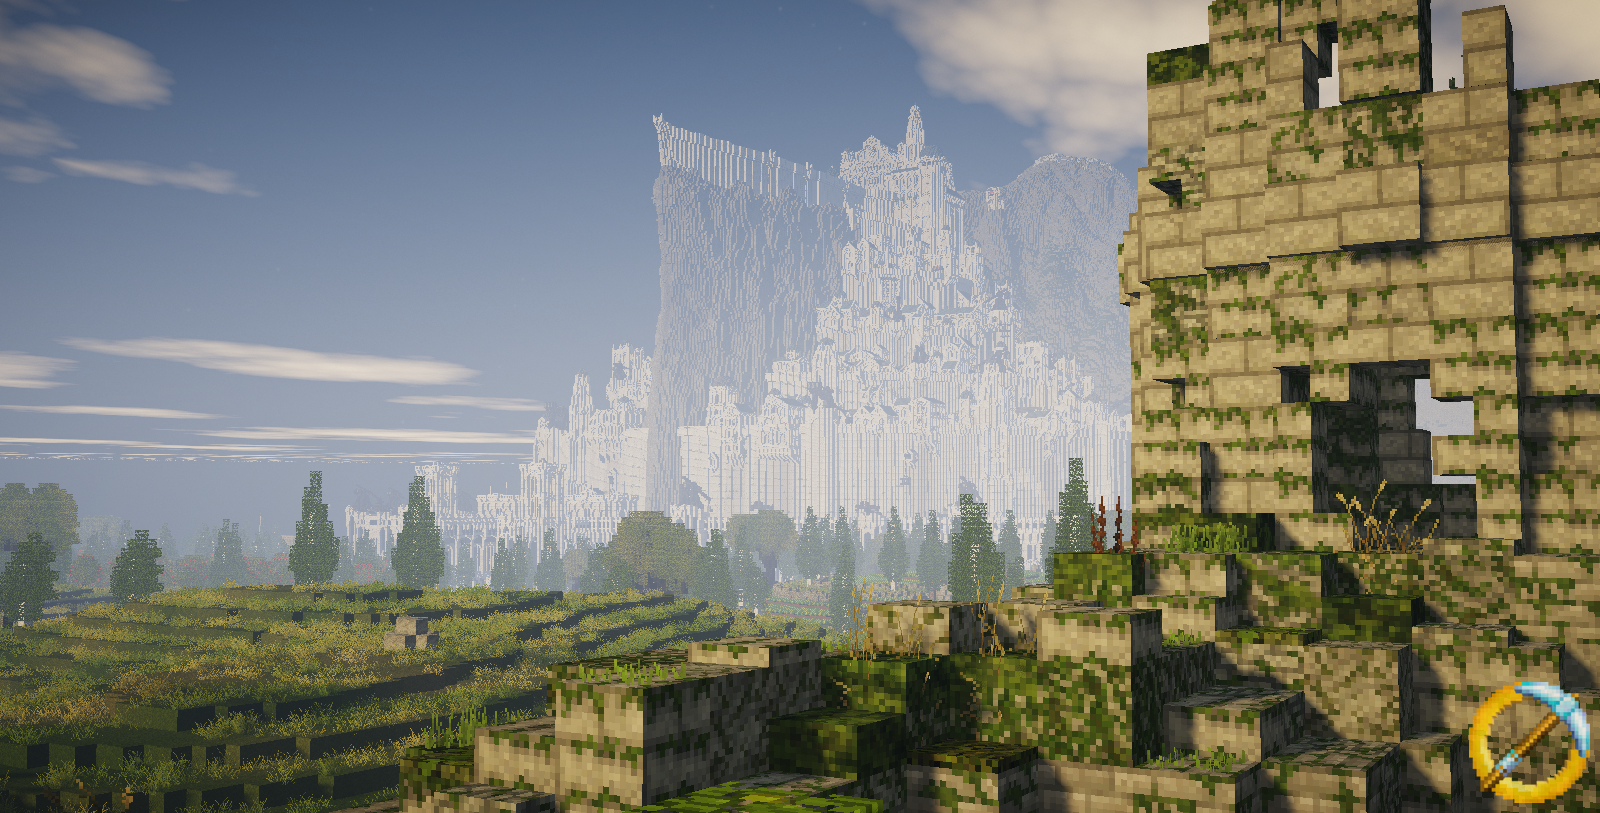 Osgiliath and Minas Tirith image - Minecraft Community - ModDB